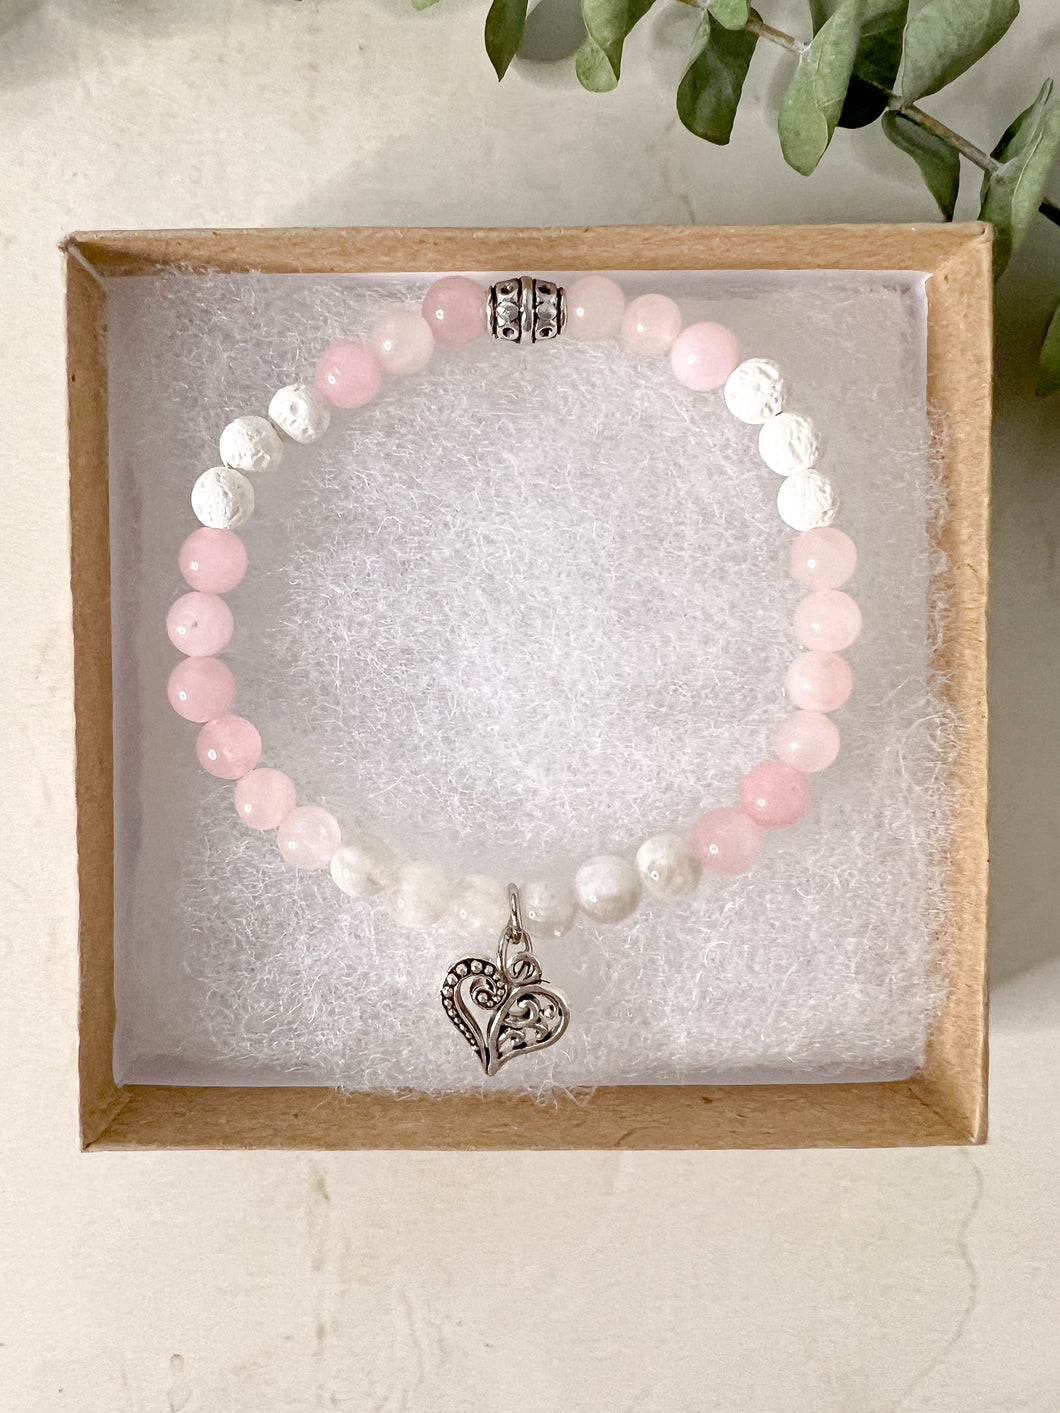 Rose Quartz Diffuser Charm Bracelet - Heart Charm Diffuser Bracelet - Rose Quartz Bead Bracelet - Love Jewelry Gift